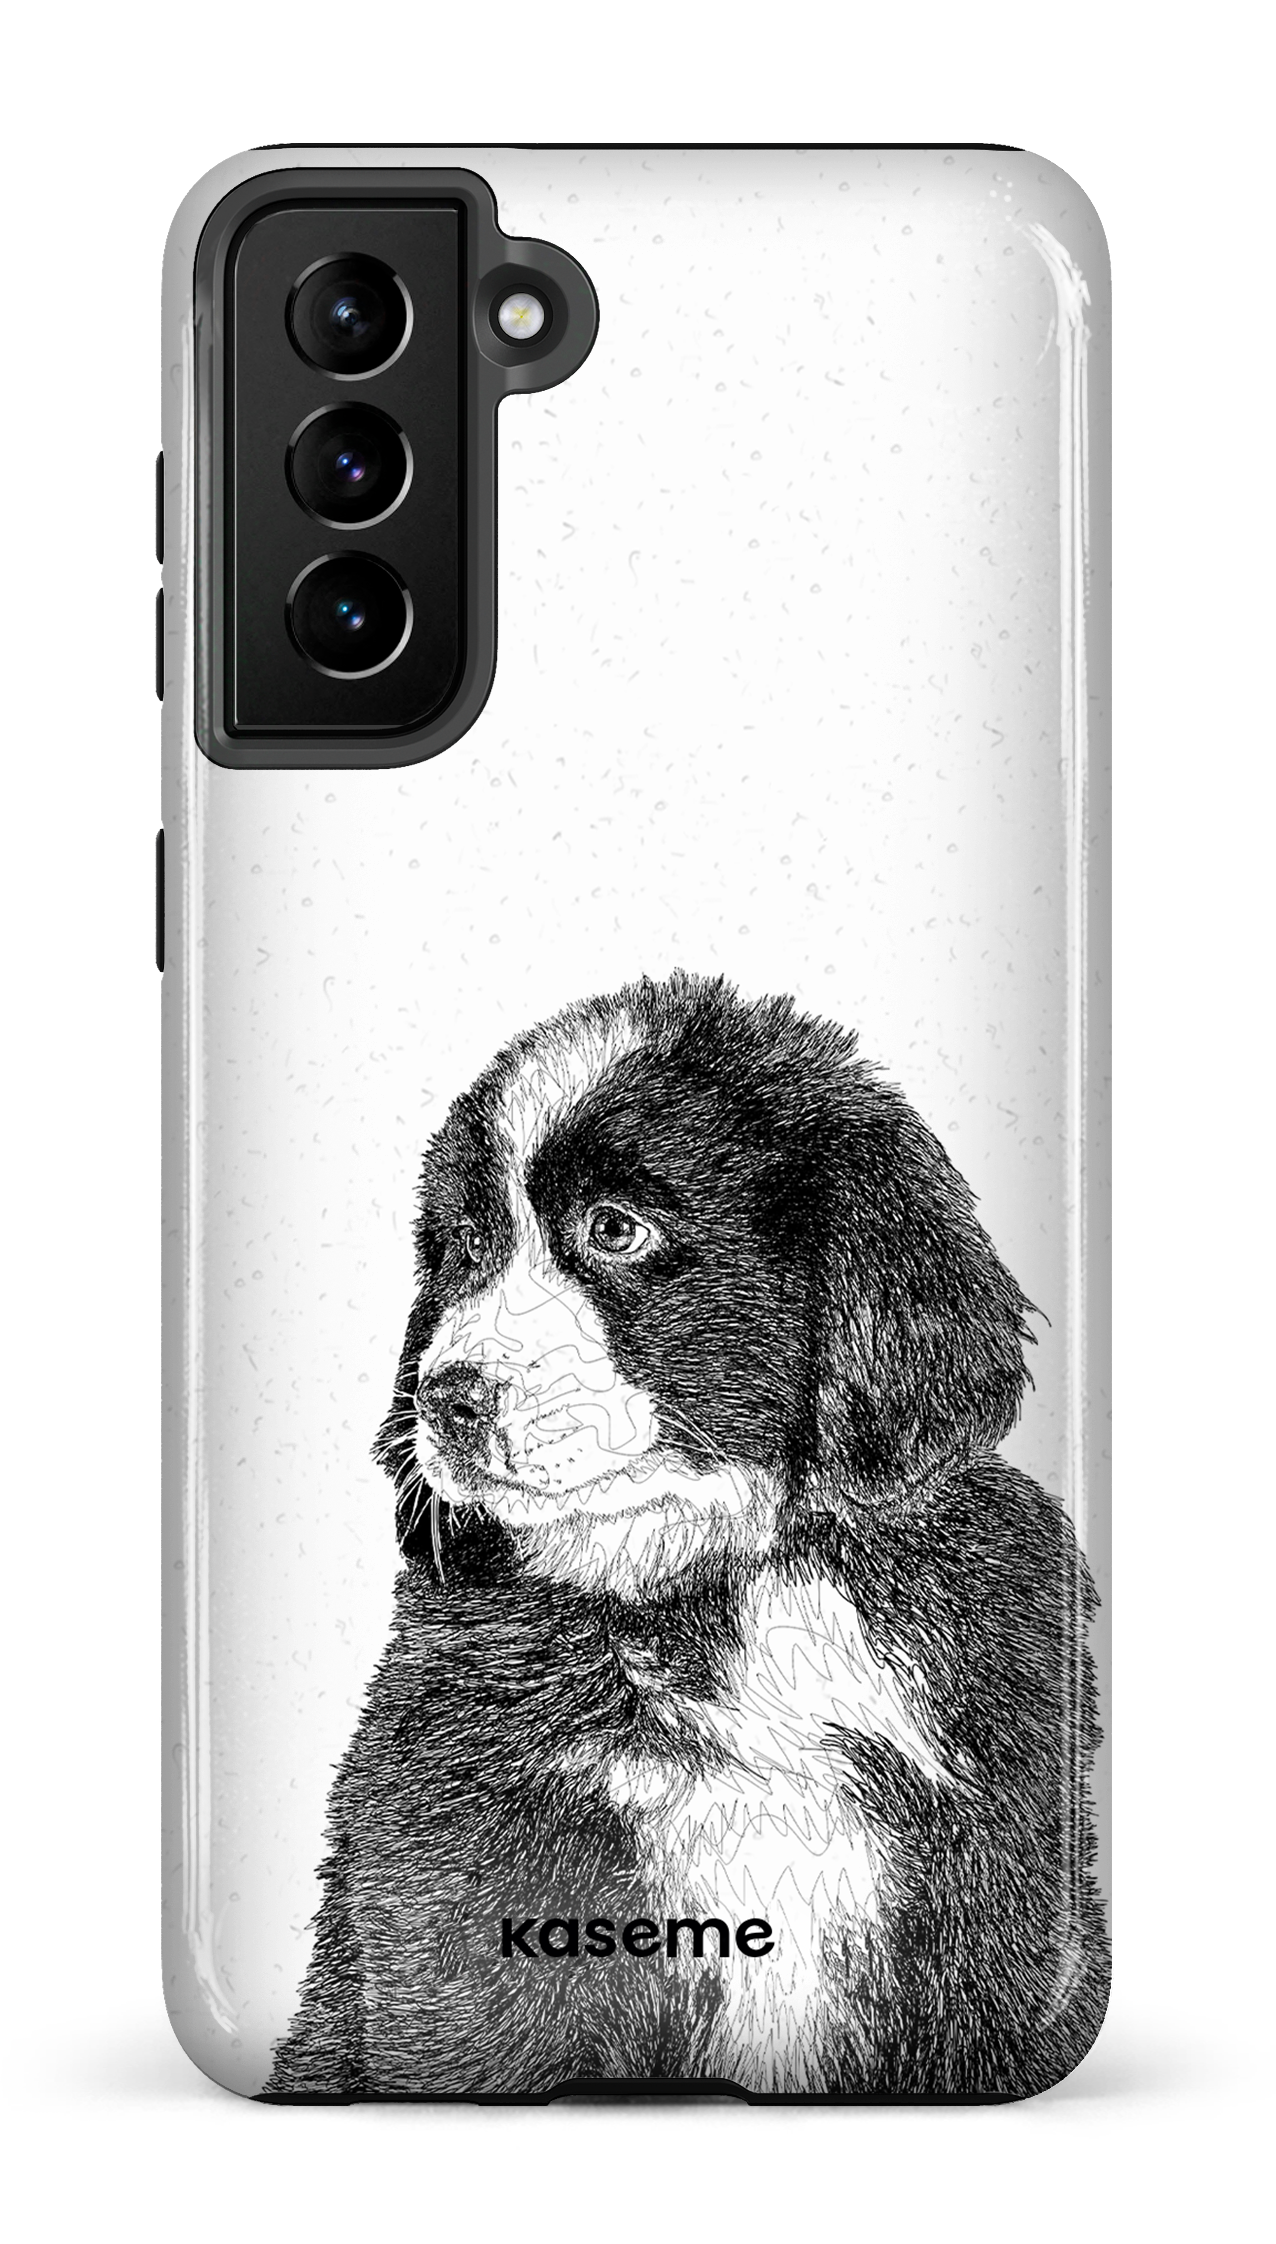 Bernese Mountain Dog - Galaxy S21 Plus